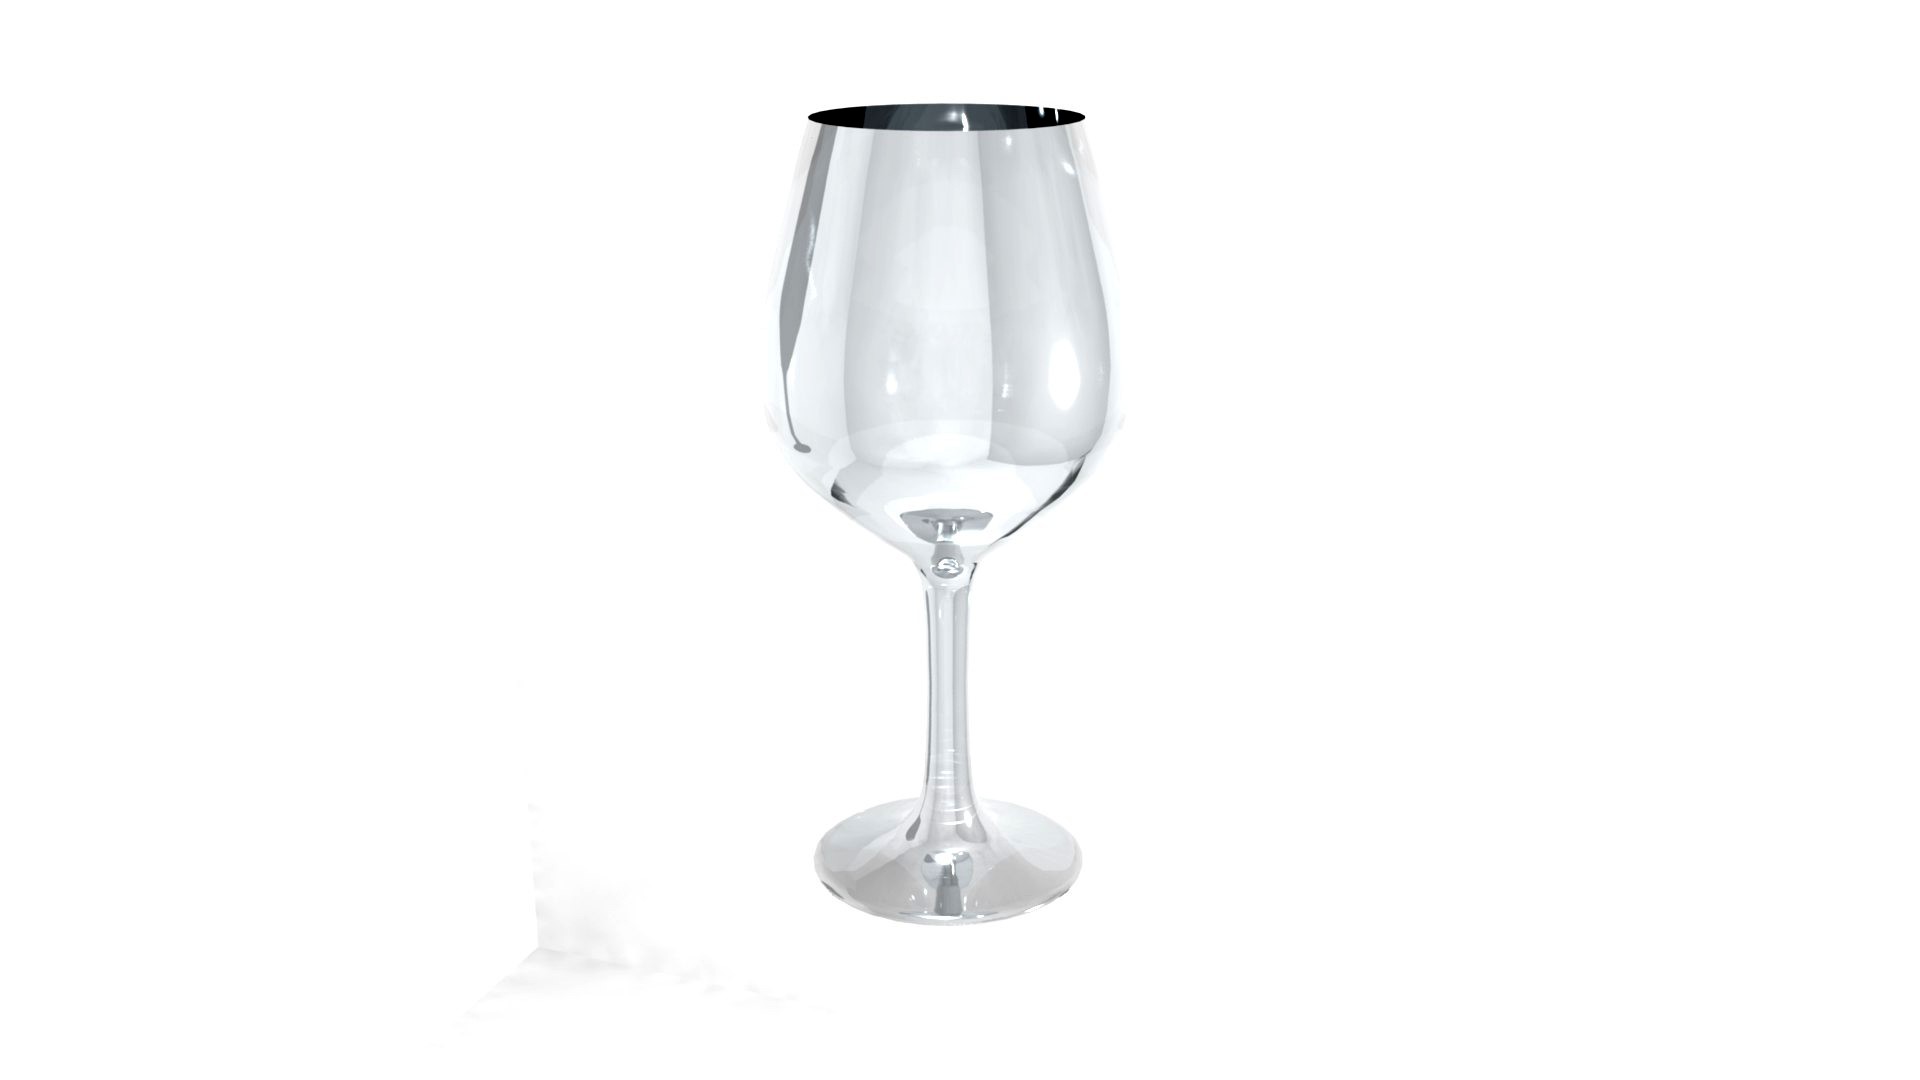 Burgundy-style wineglass